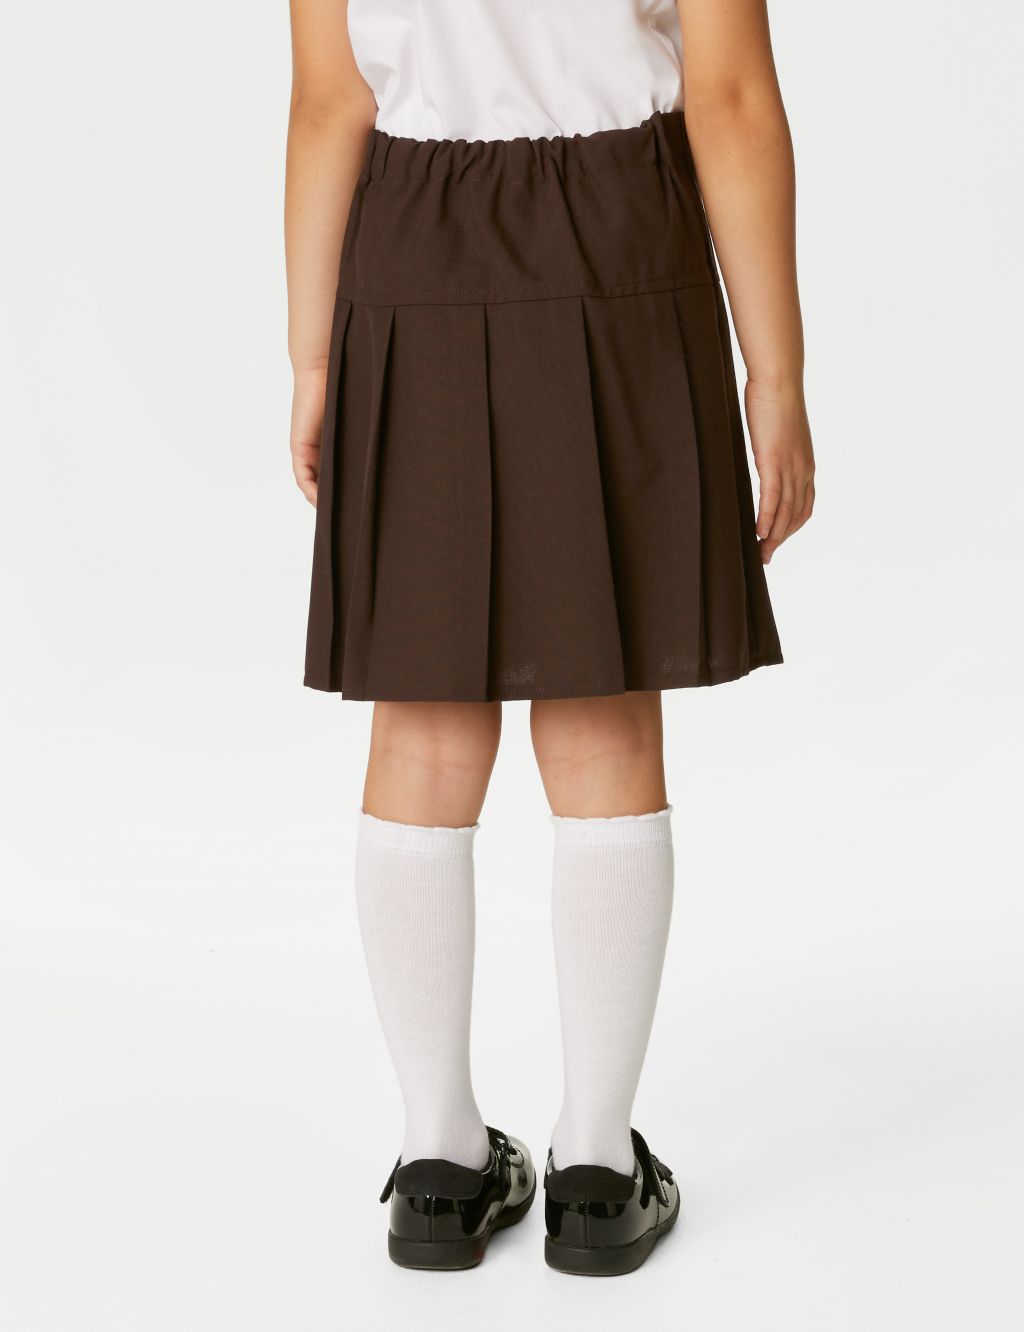 2pk Girls' Crease Resistant School Skirts (2-16 Yrs) image 4